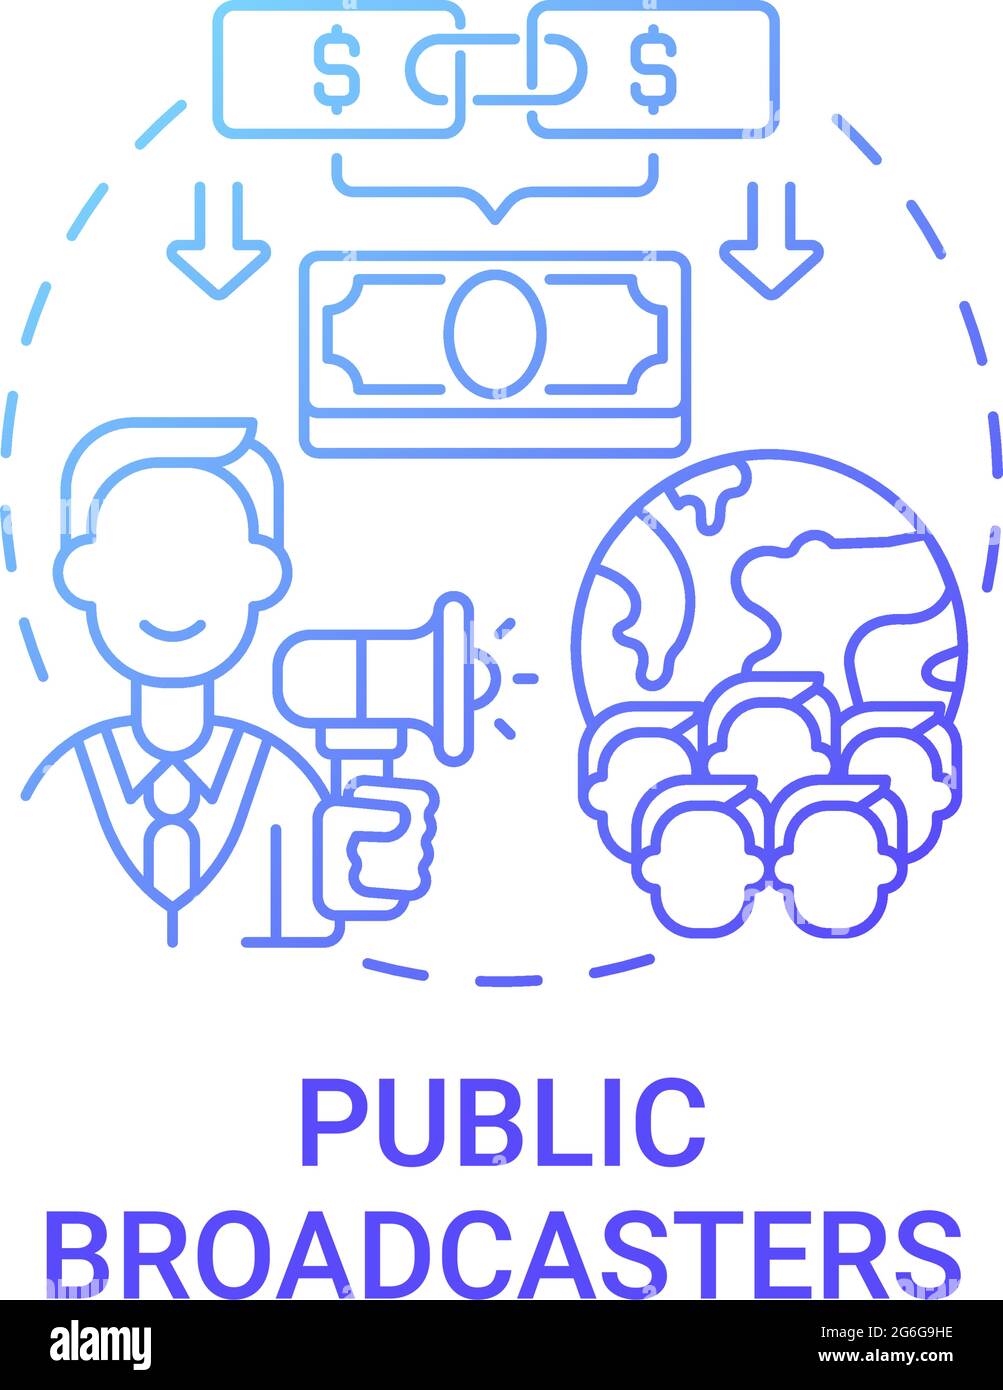 Public broadcasters fundraiser concept icon Stock Vector